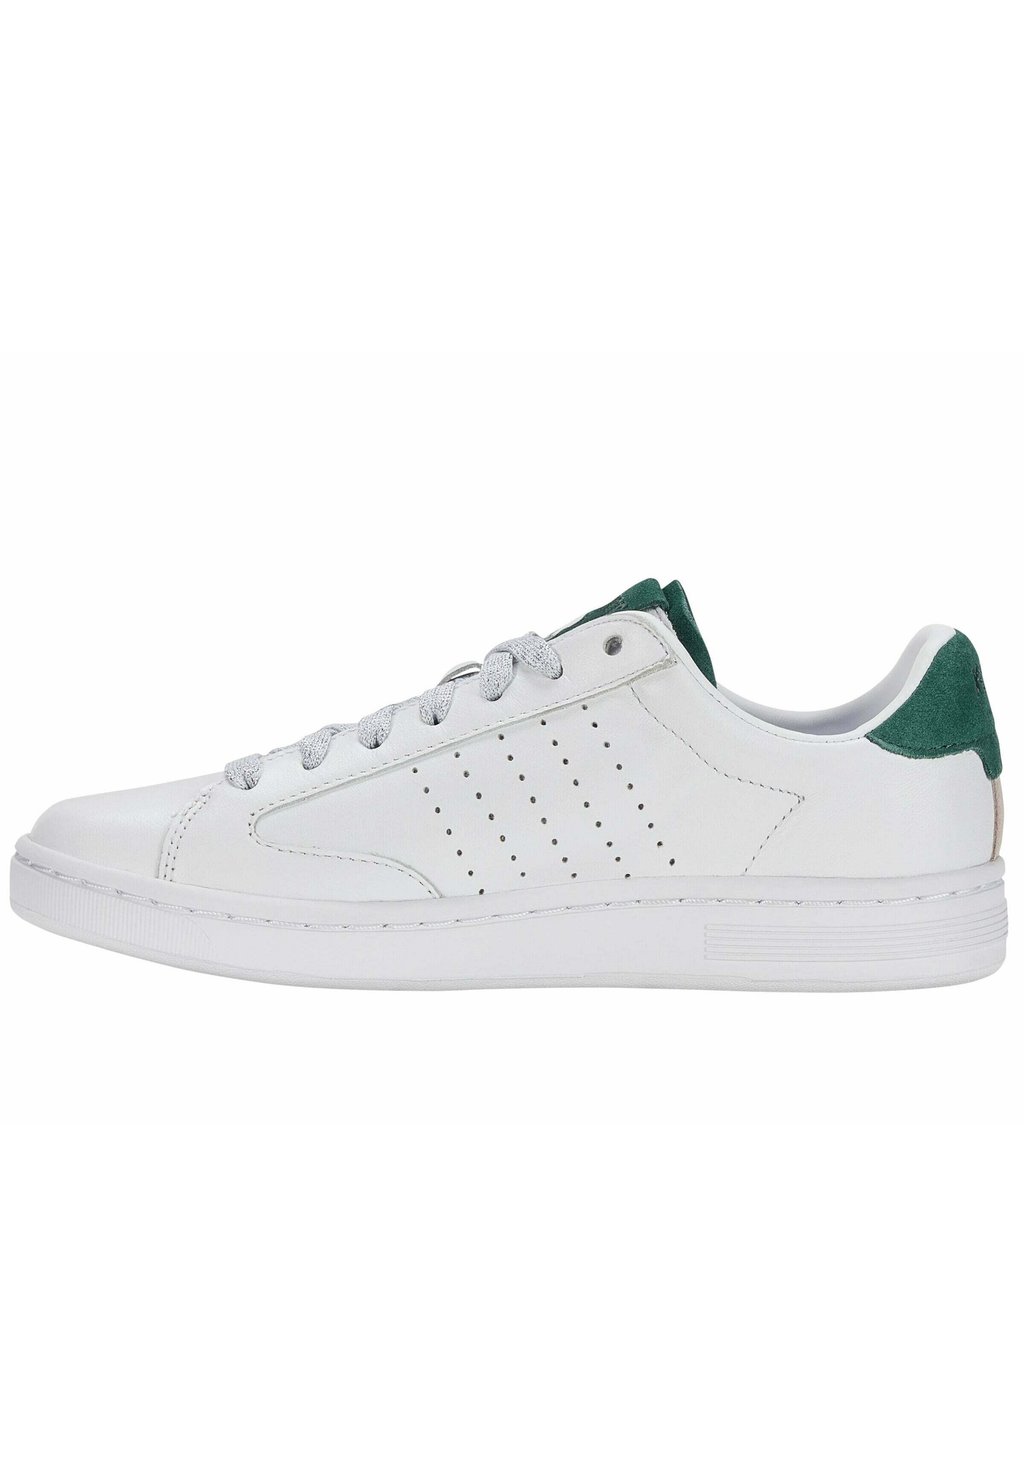 Низкие кроссовки LOZAN KLUB LTH K-SWISS, белый белый зеленый sde фото